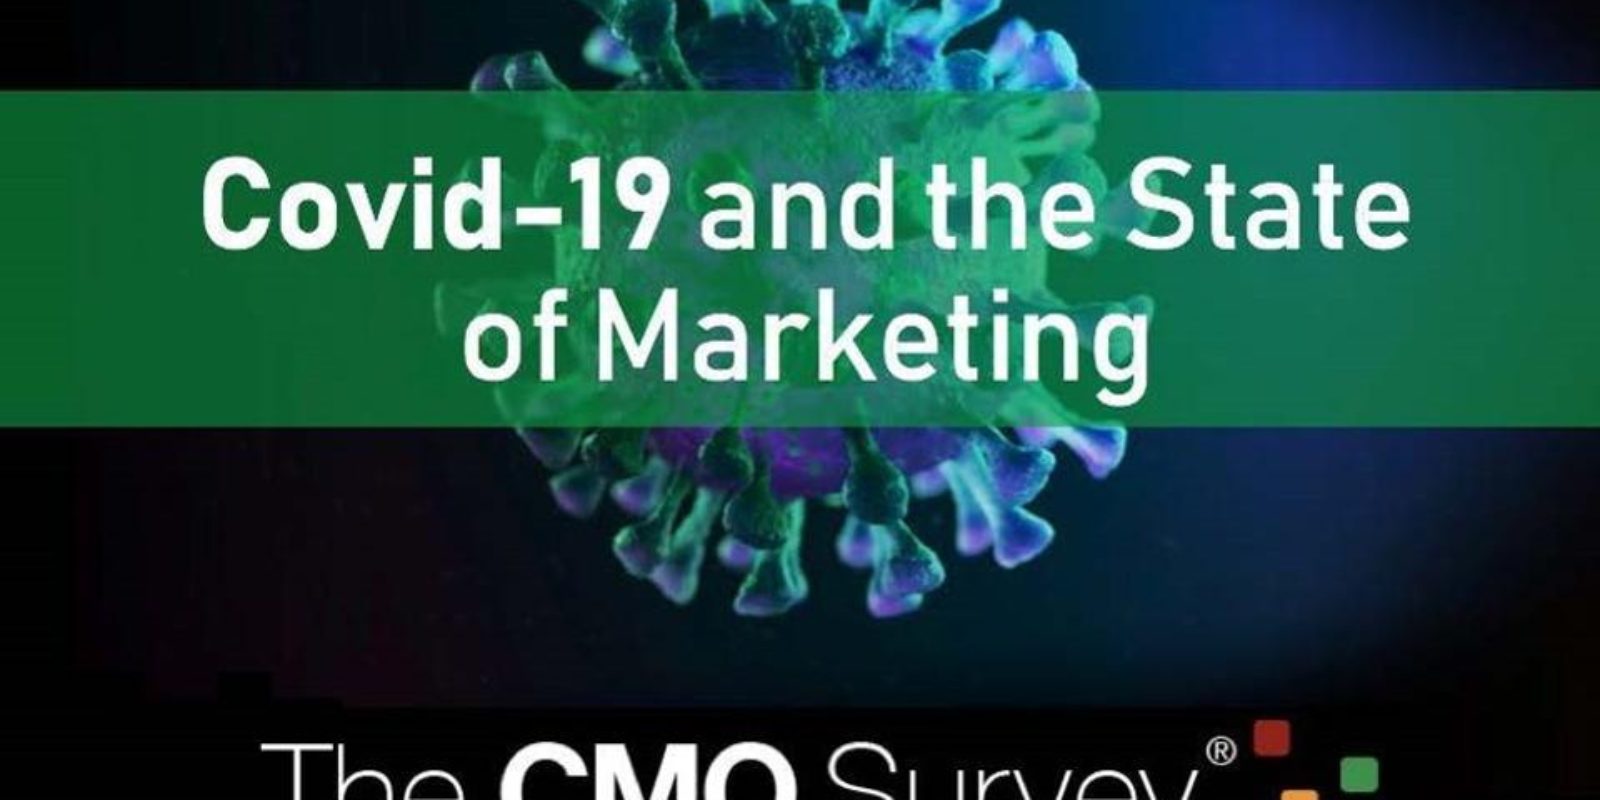 CMOs Report Massive Shifts In Consumer Behavior And Marketing Strategies Post COVID-19